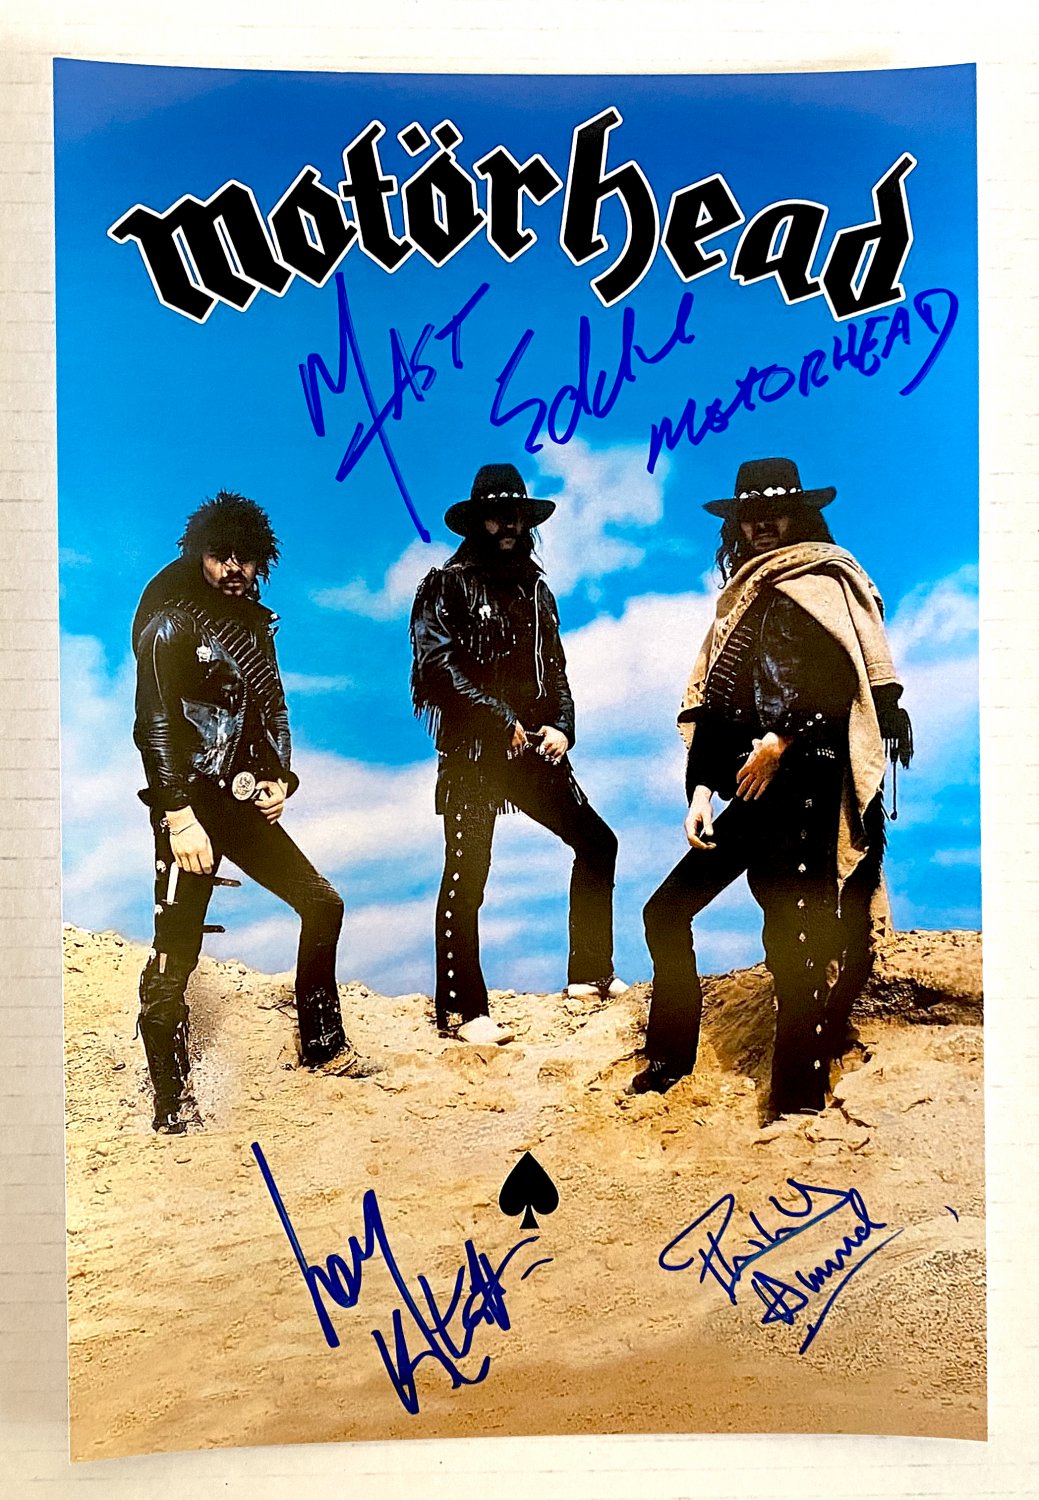 Motorhead band signed autographed 8x12 photo Lemmy Kilmister Ace of Spades autographs